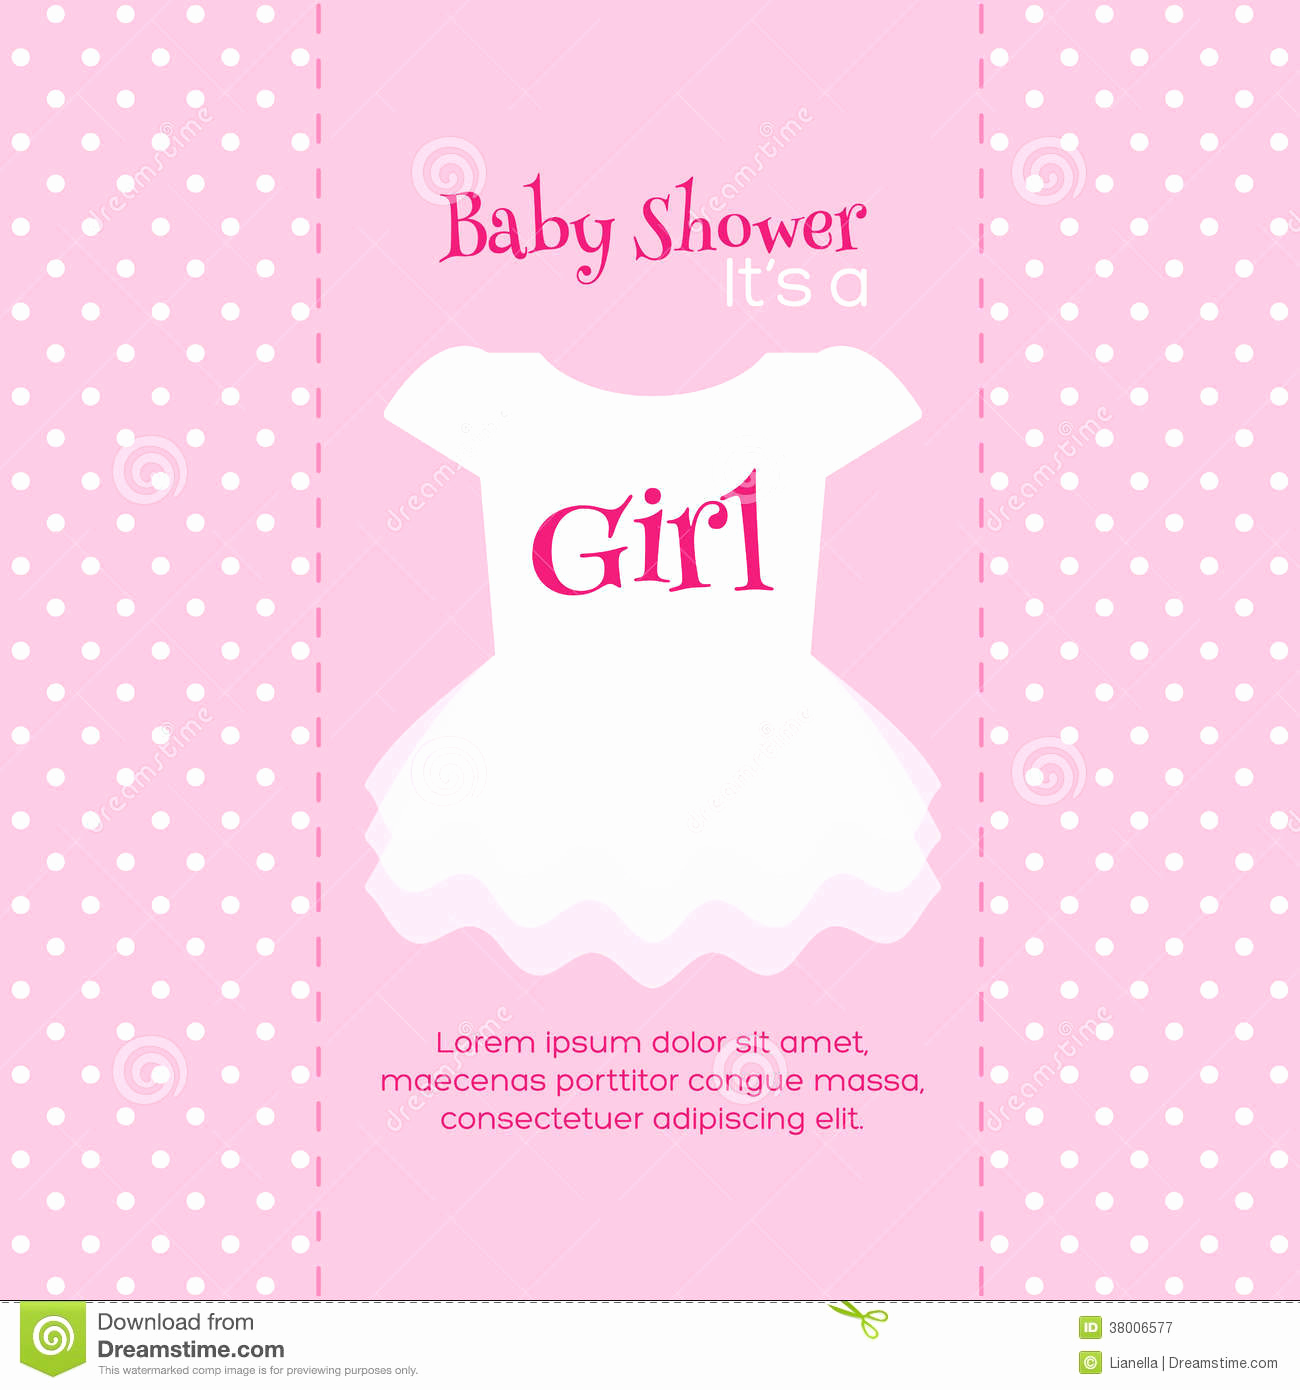 Baby Shower Invitation Template Elegant Free Princess Baby Shower Invitation Templates